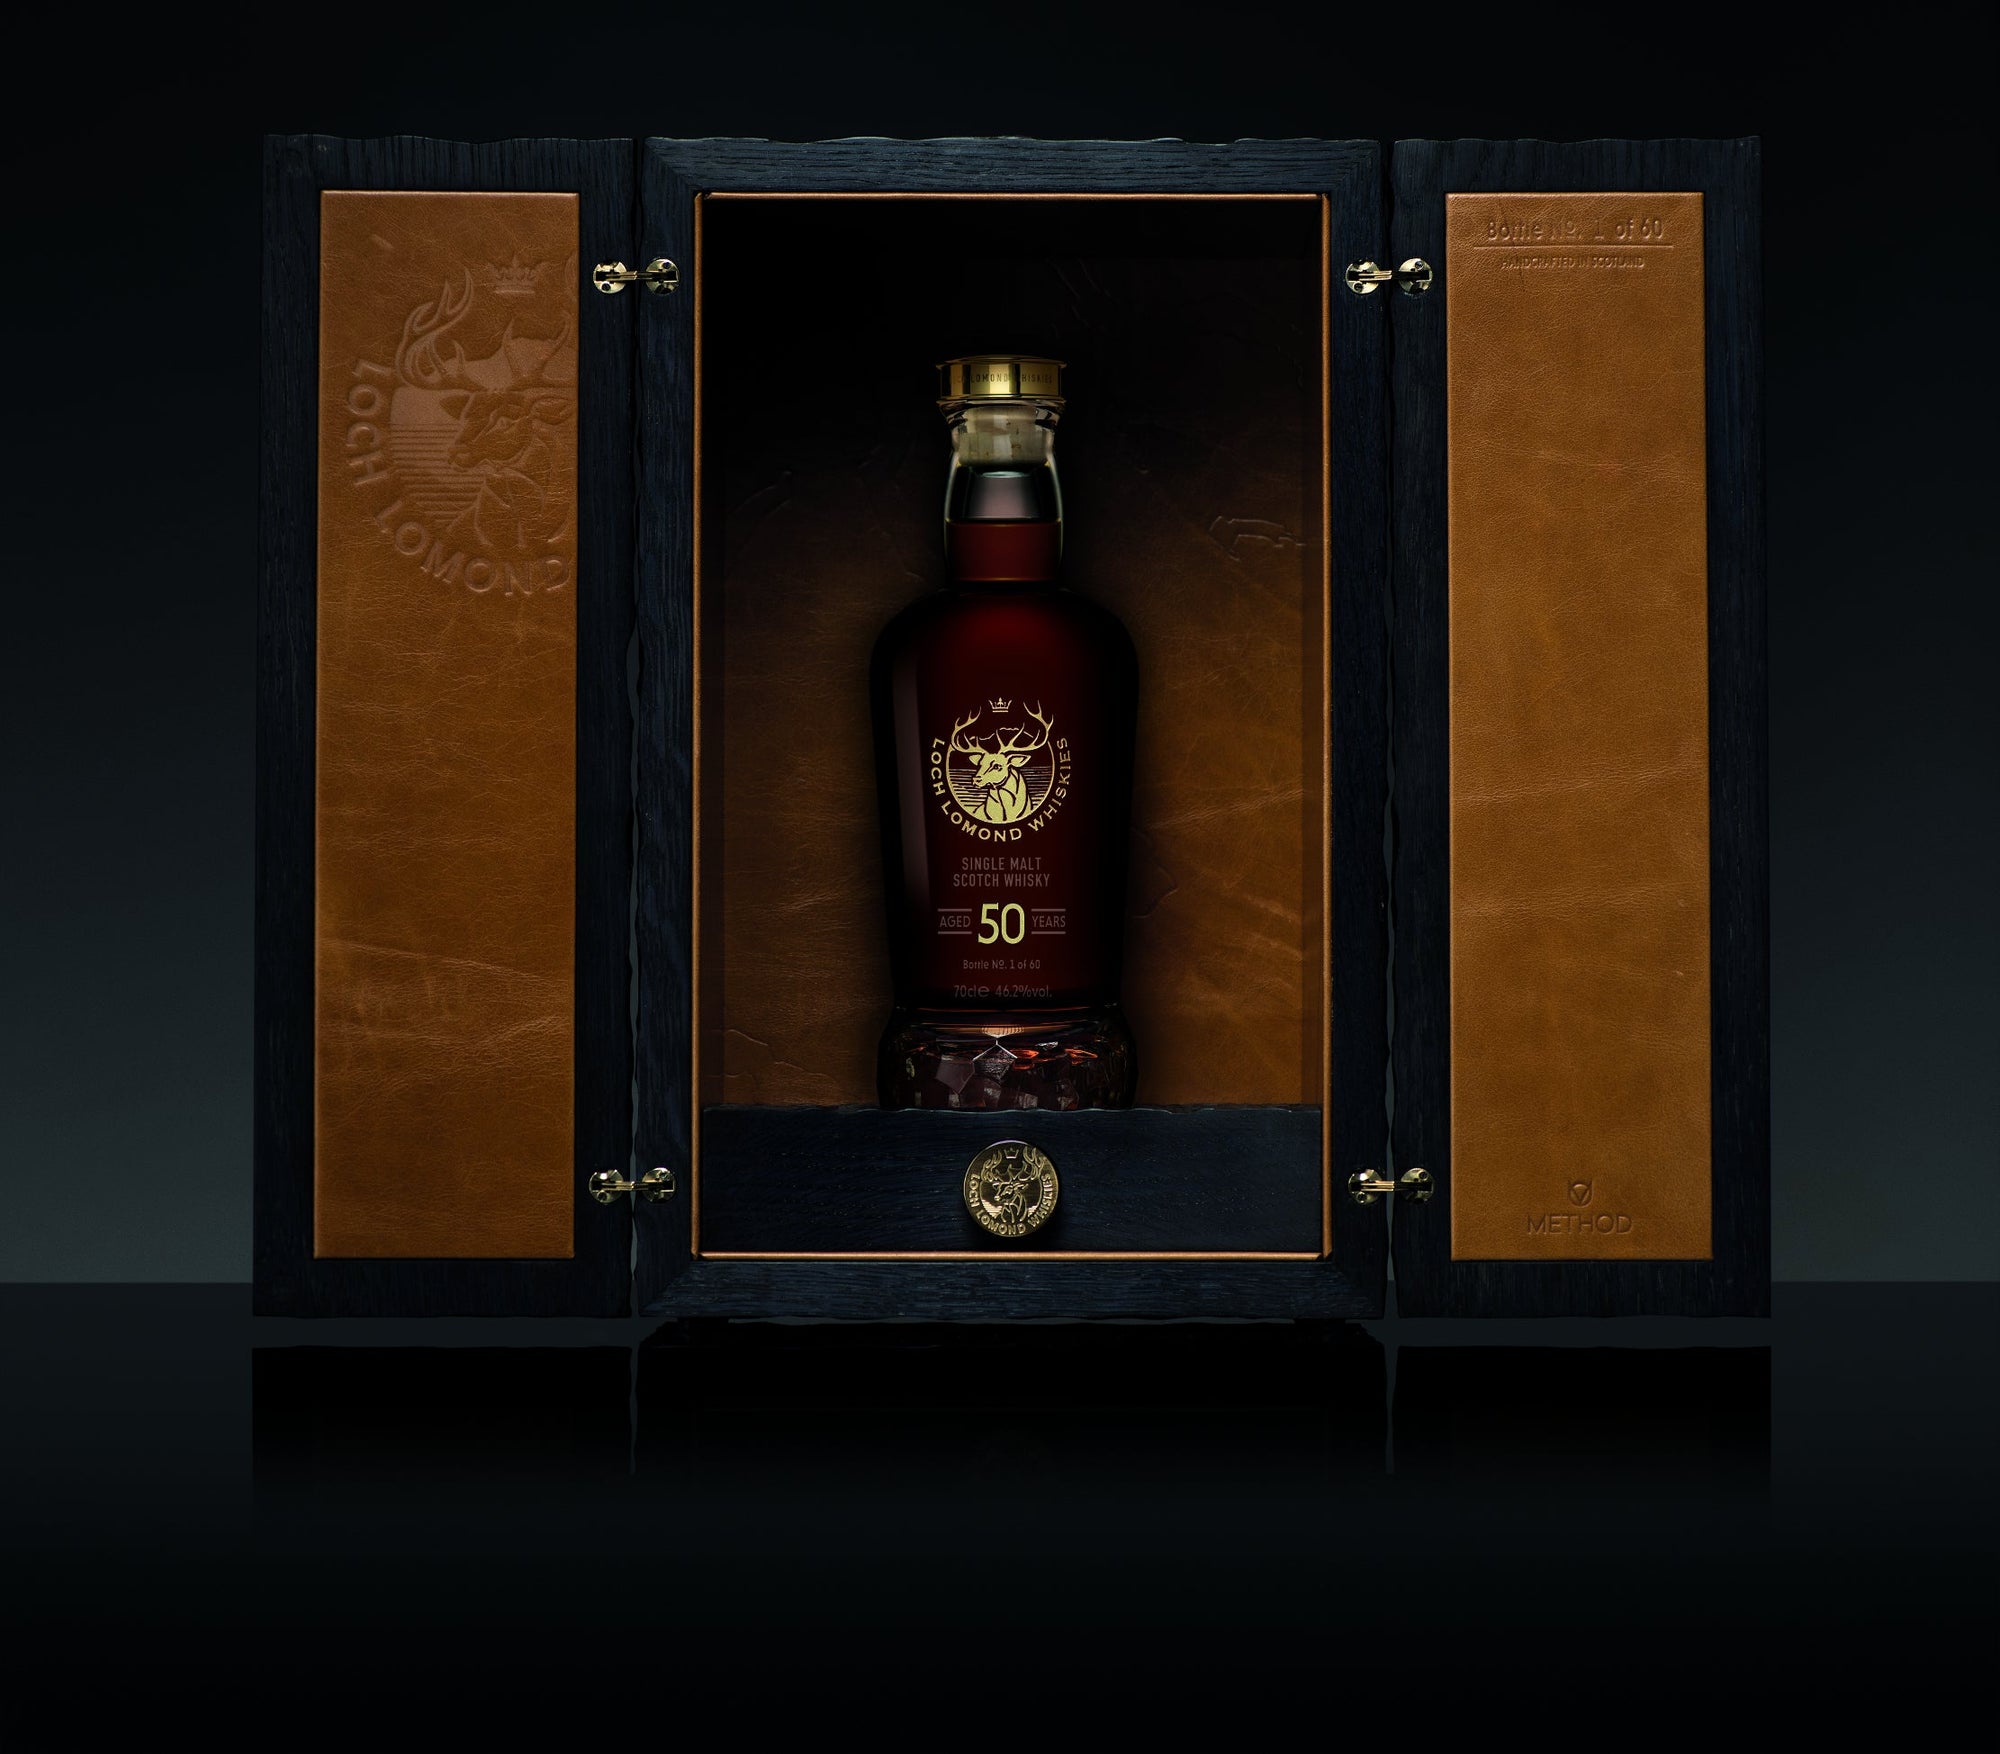 Loch Lomond Release 50 Year Old Whisky